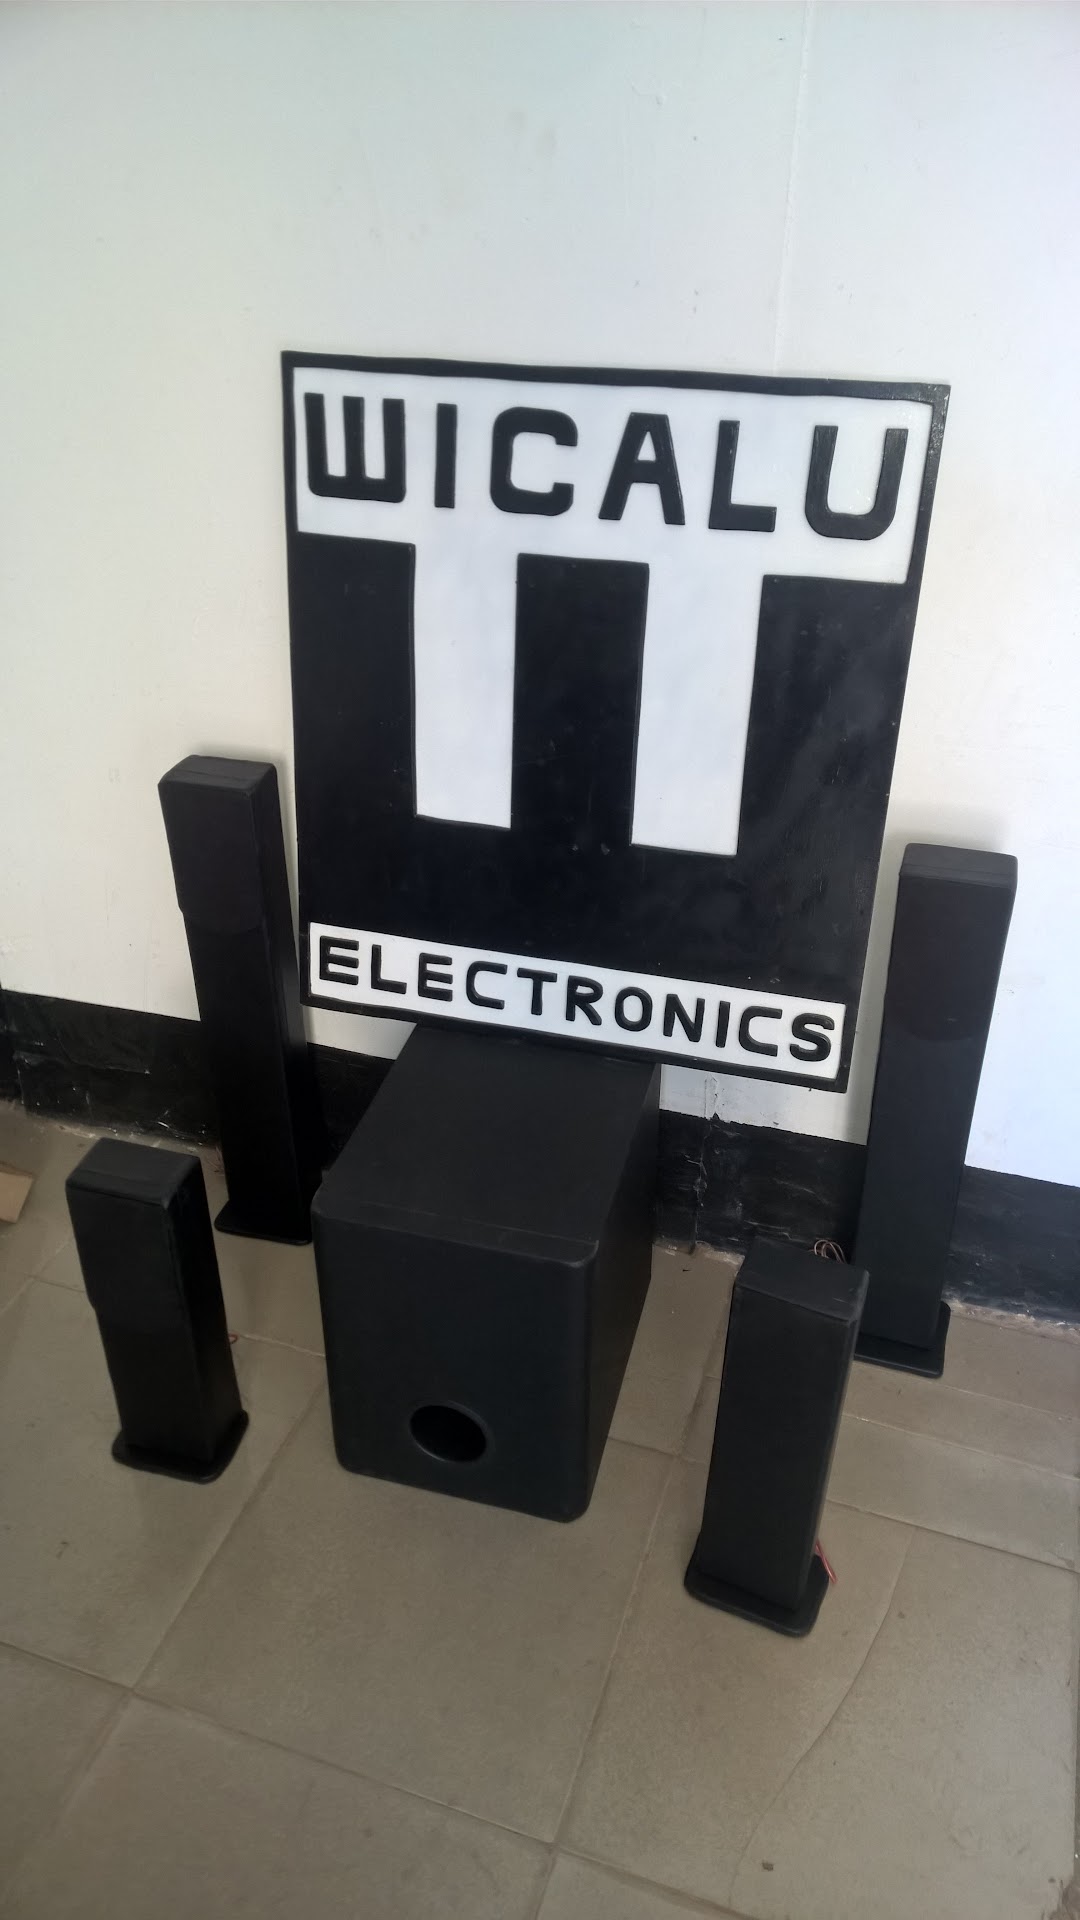 Wicalu electronics